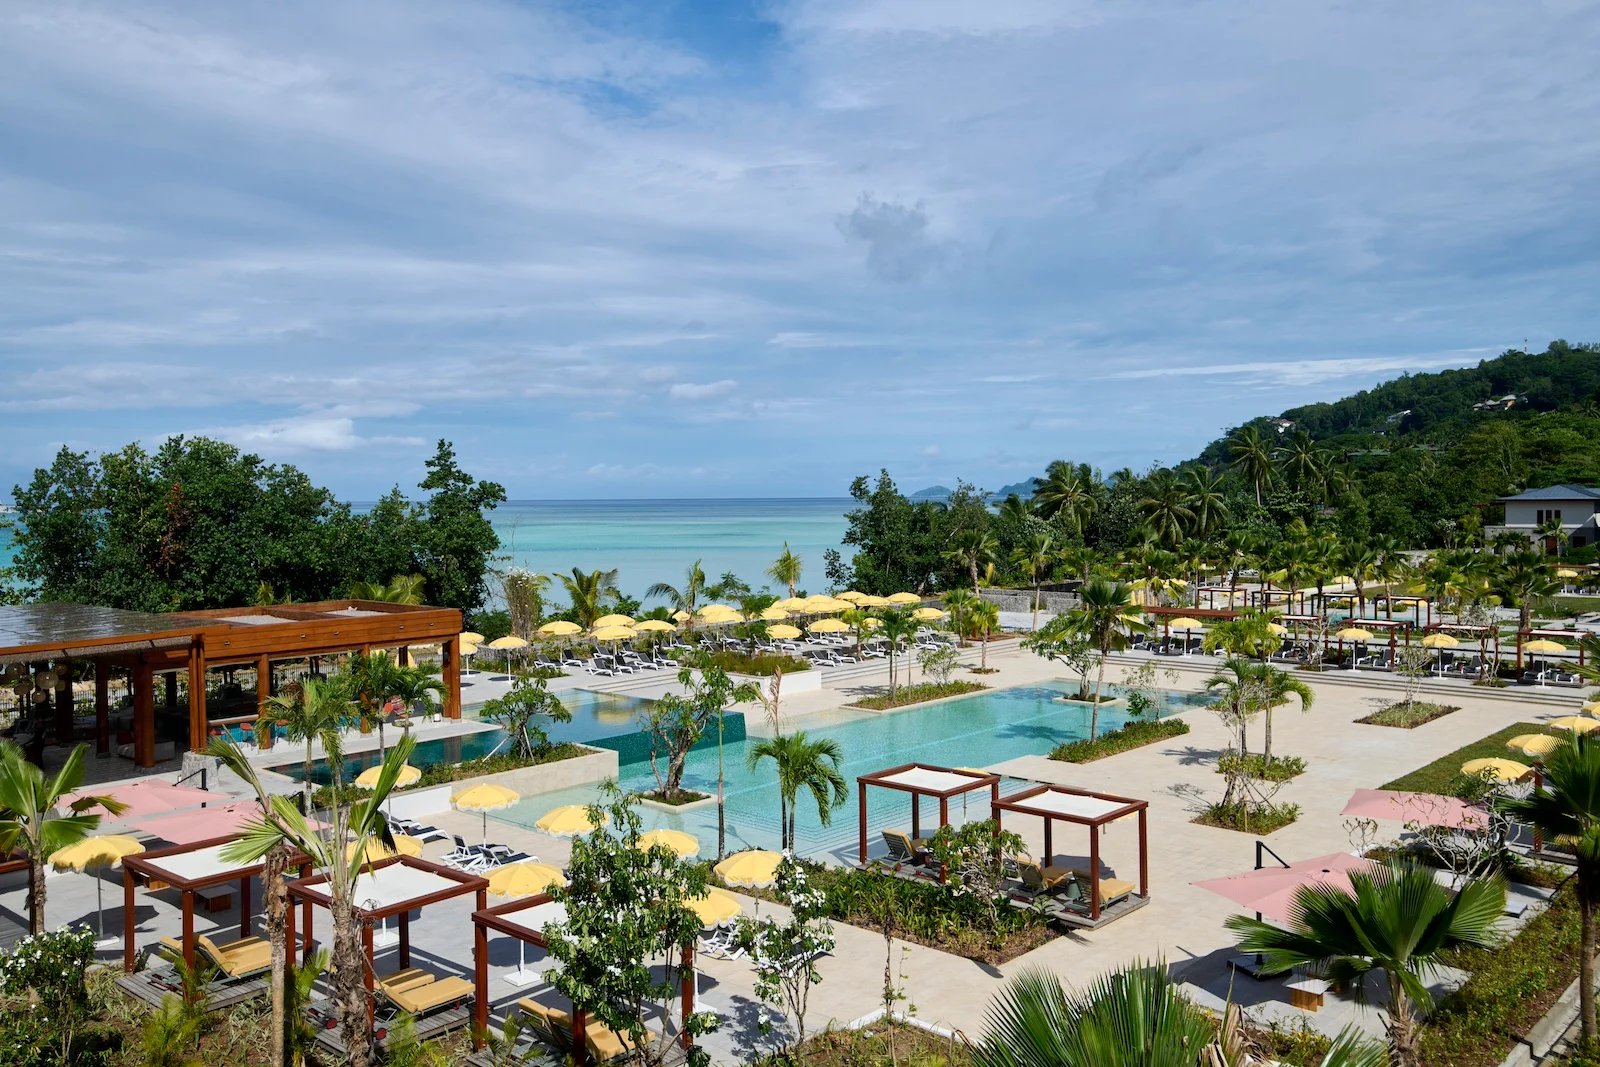 Canopy by Hilton Seychelles Pool